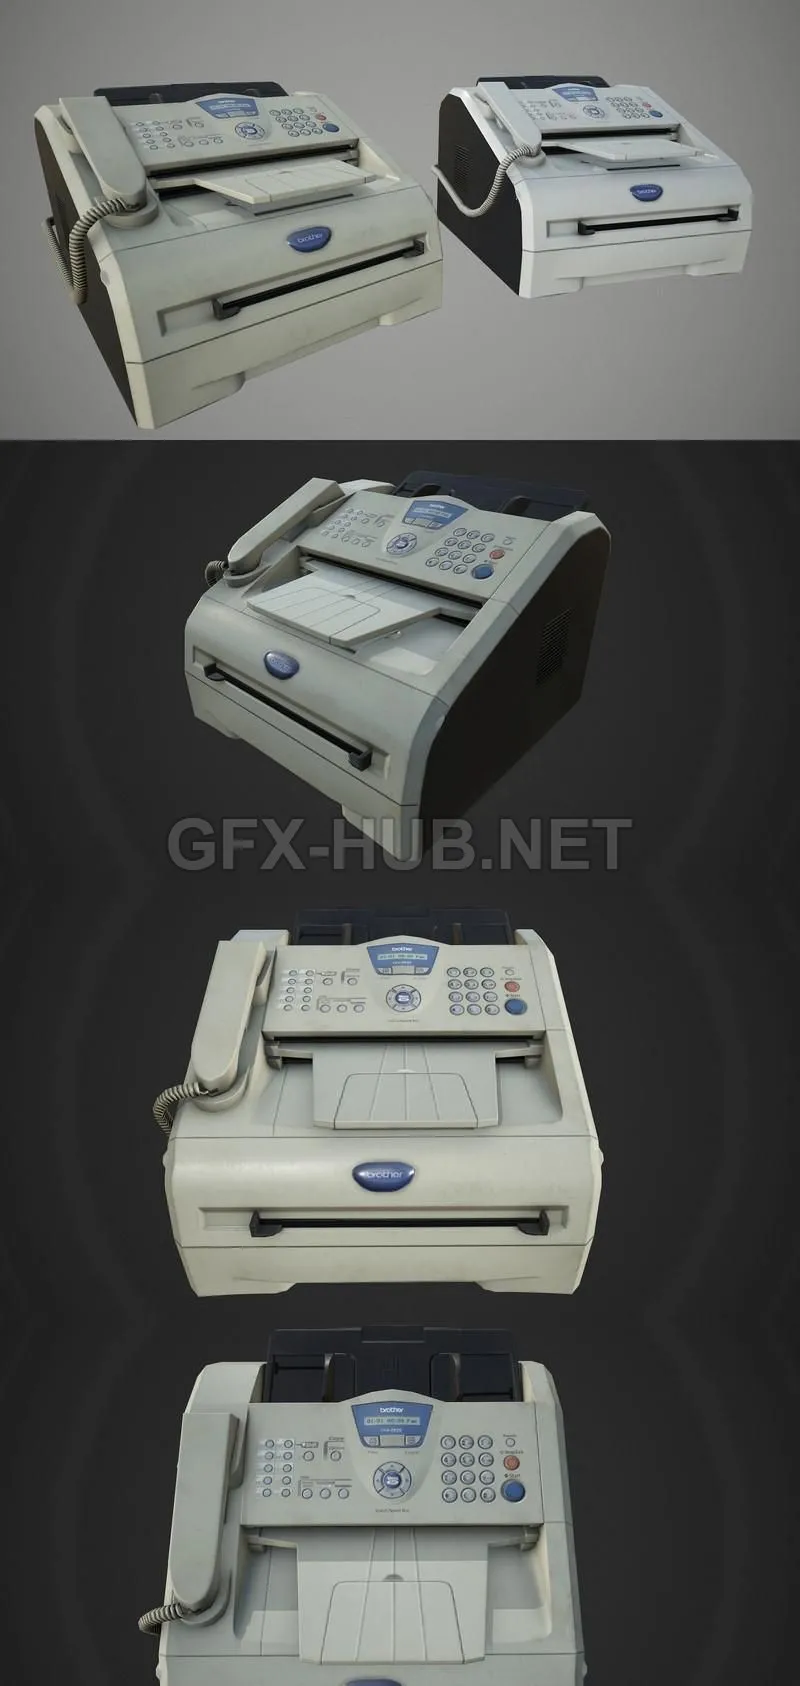 PBR Game 3D Model – Printer Brother IntelliFax 2820